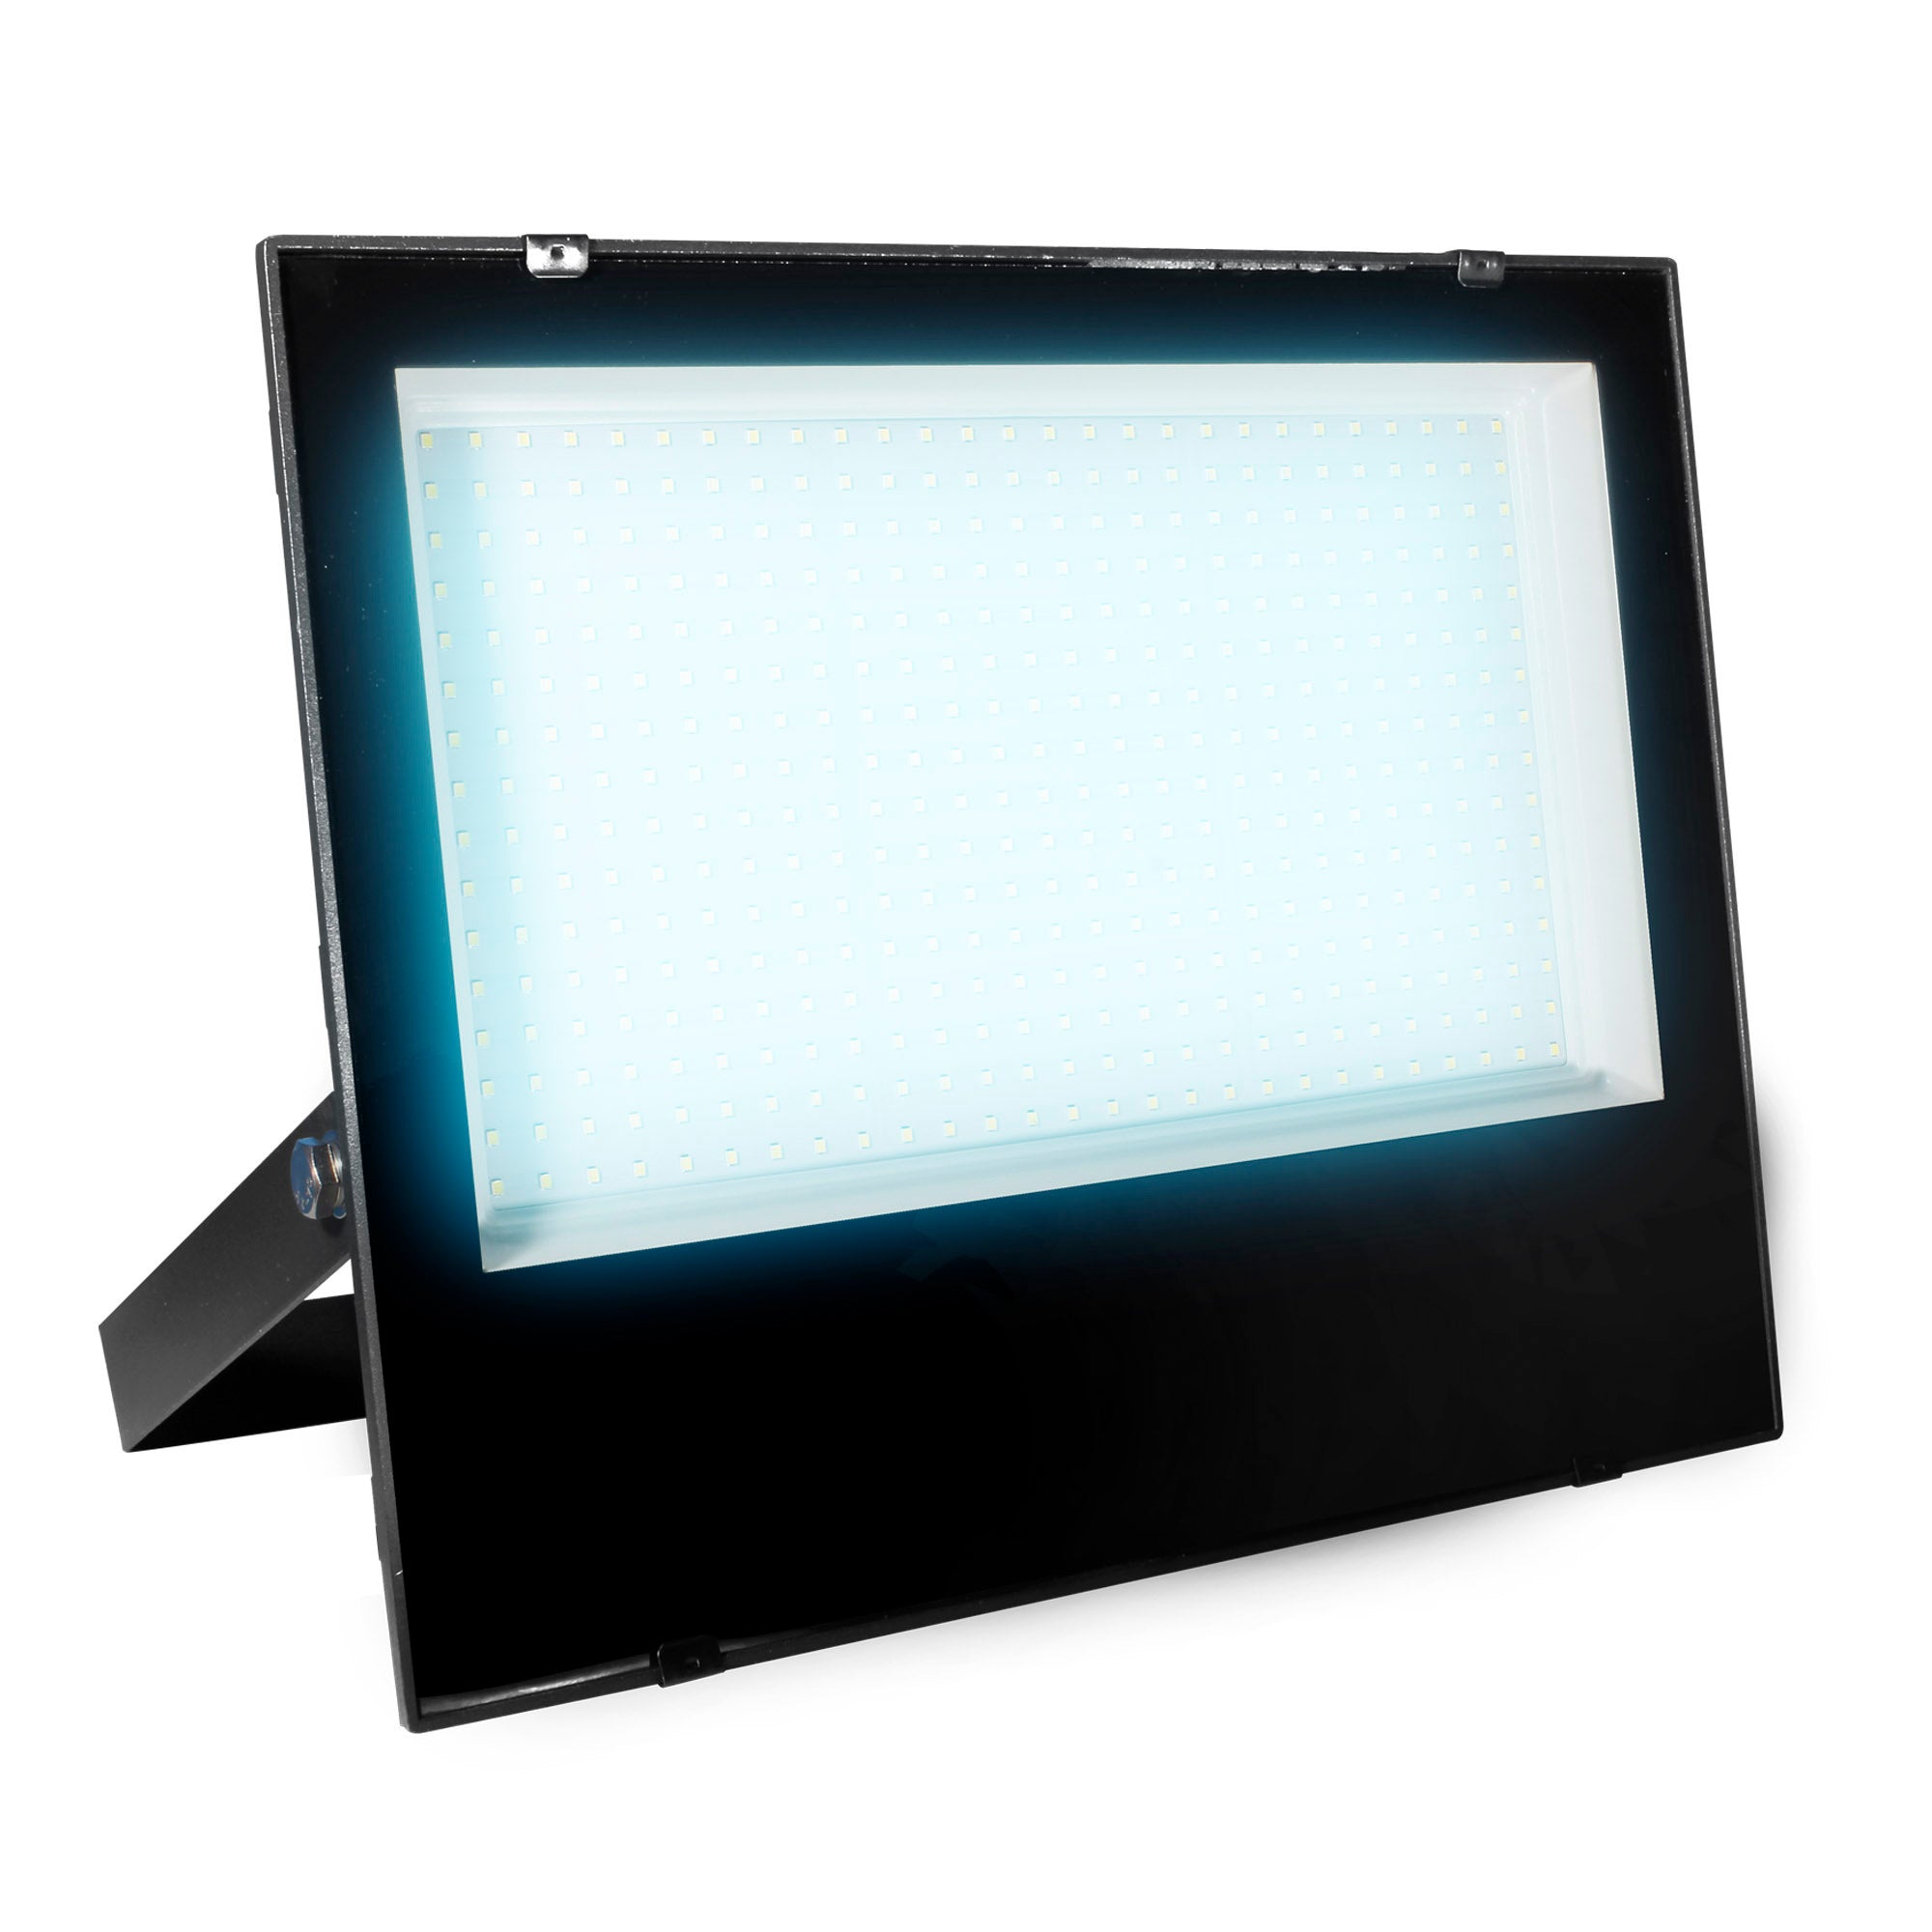 Reflector LED de sobreponer en piso negro 300 W 100-277 V~ RL-36300.N, Illux